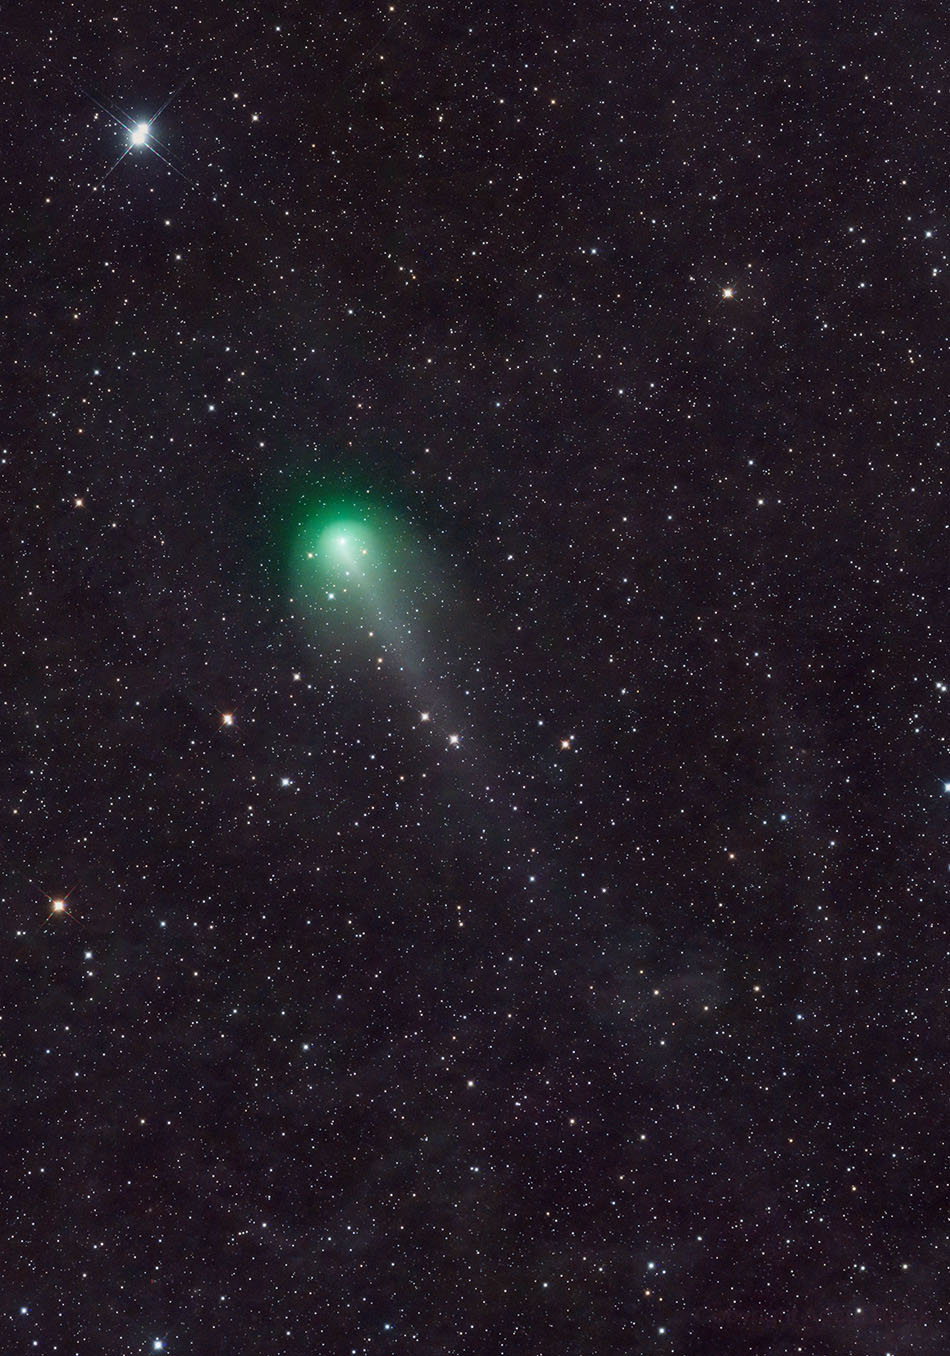 komeet Pons-Brooks